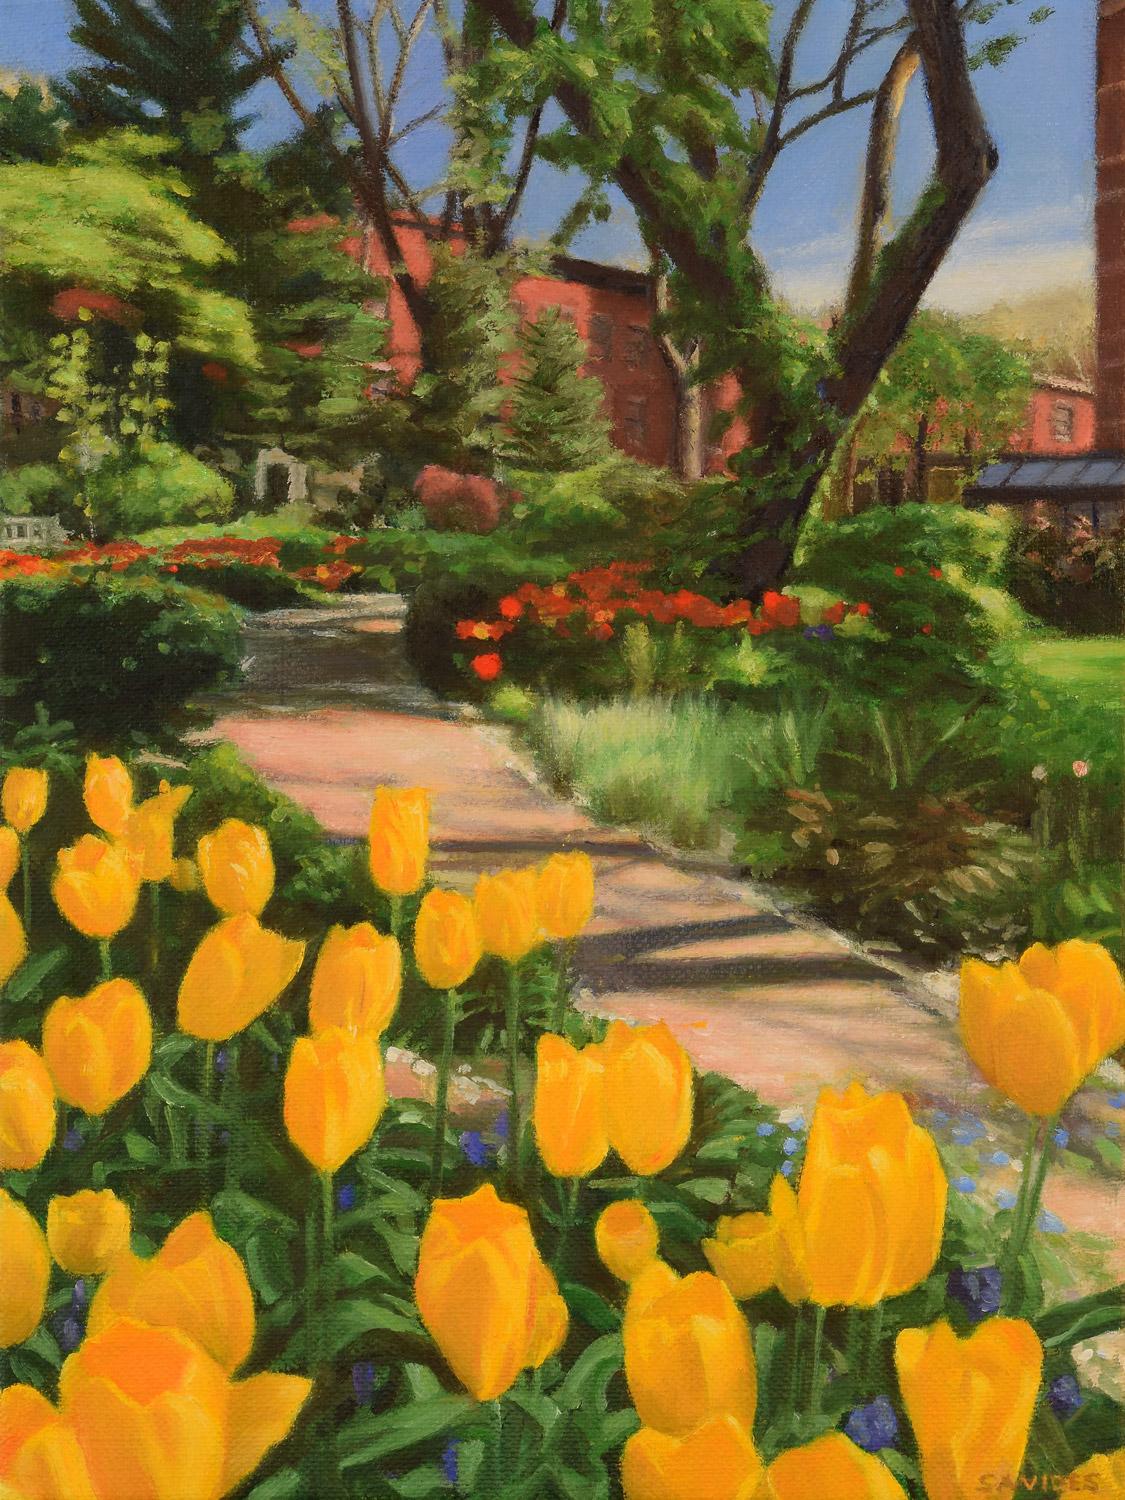 Nick Savides Landscape Painting - Jefferson Market Garden in Spring, Oil Painting